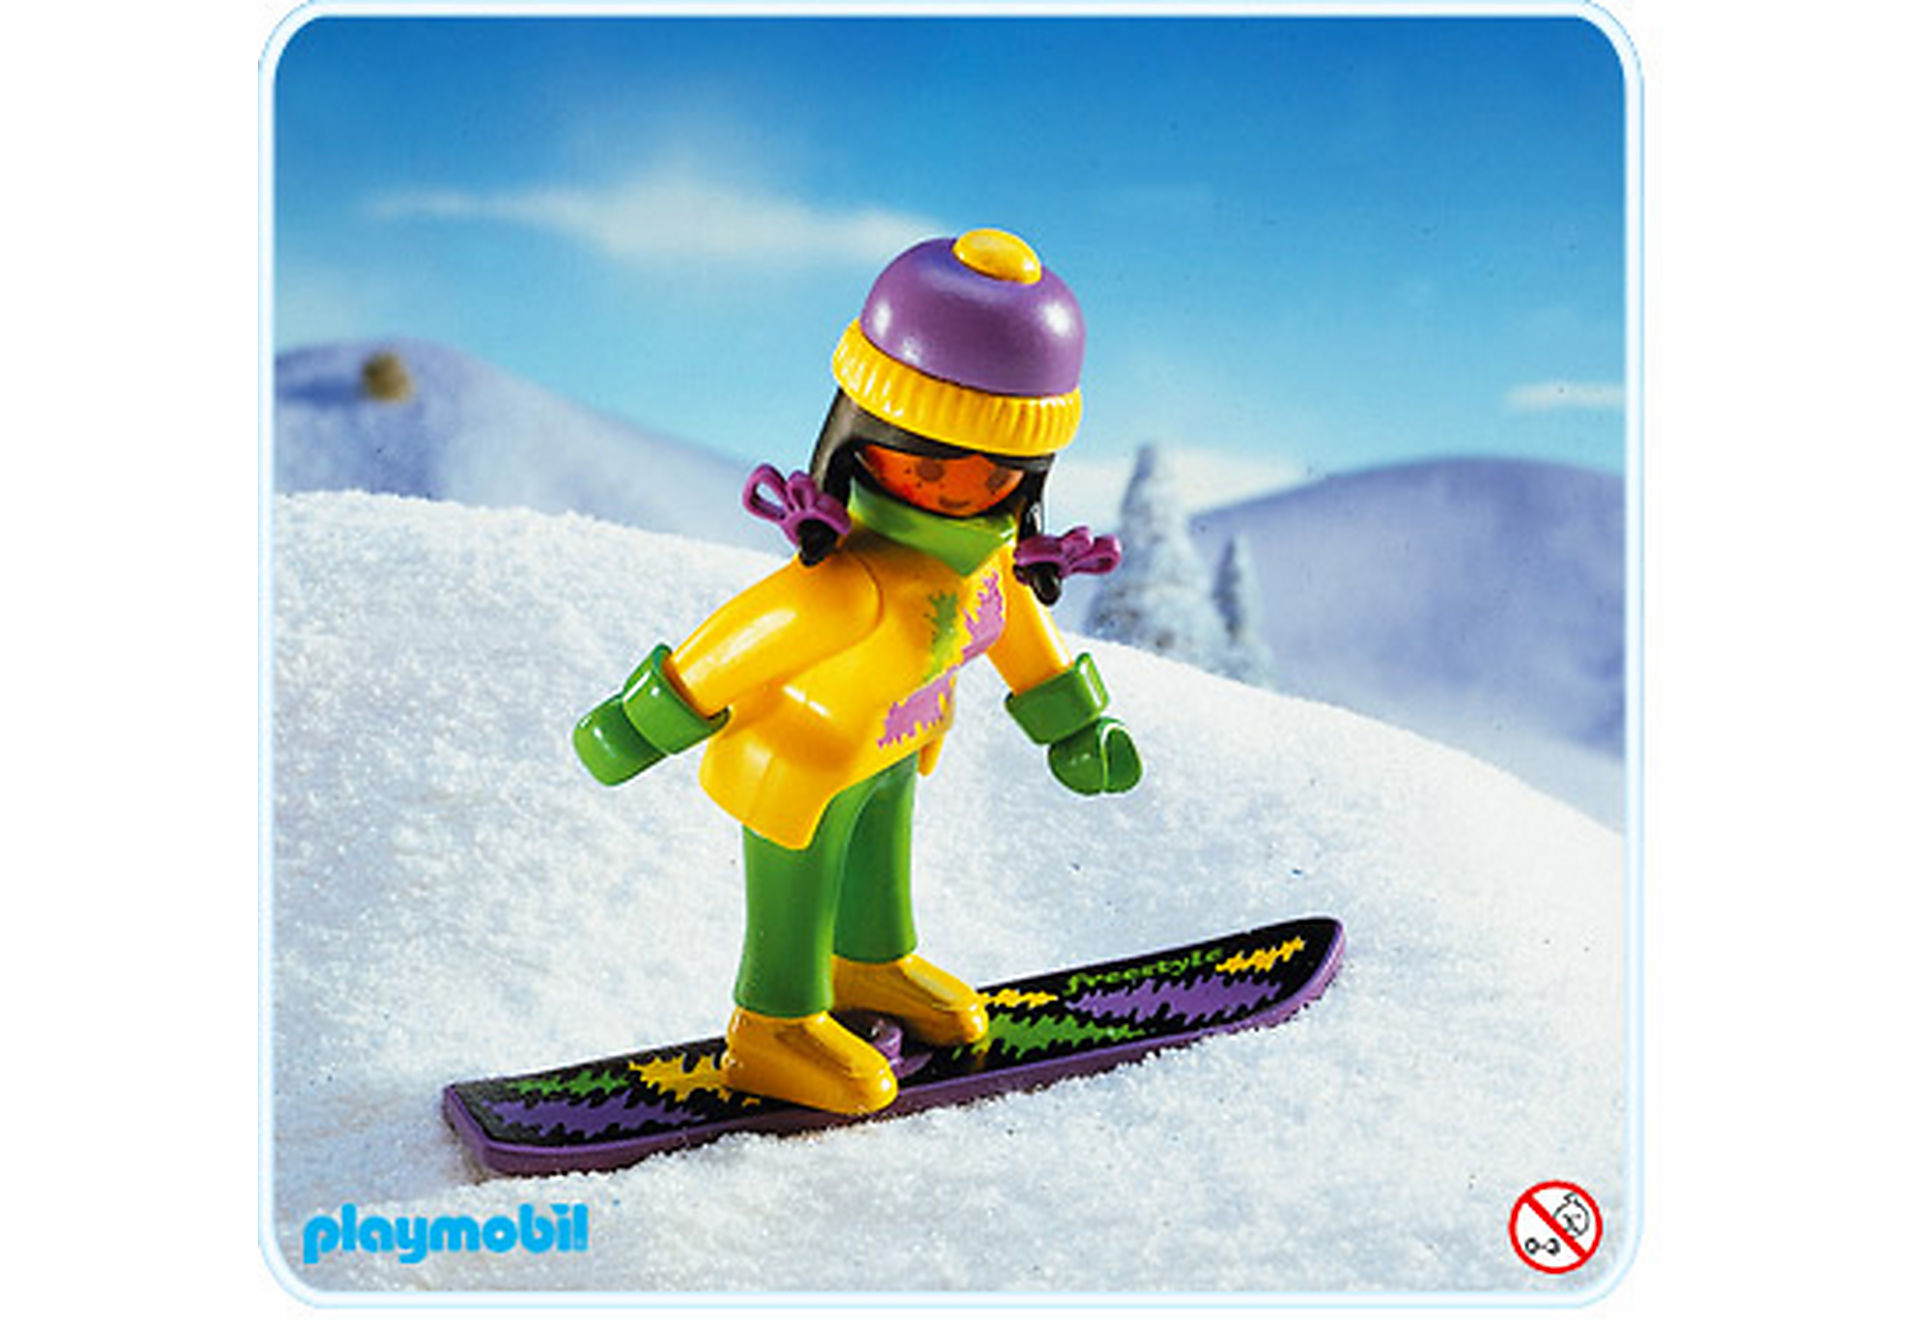 3683-A Snowboard-Fahrerin zoom image1